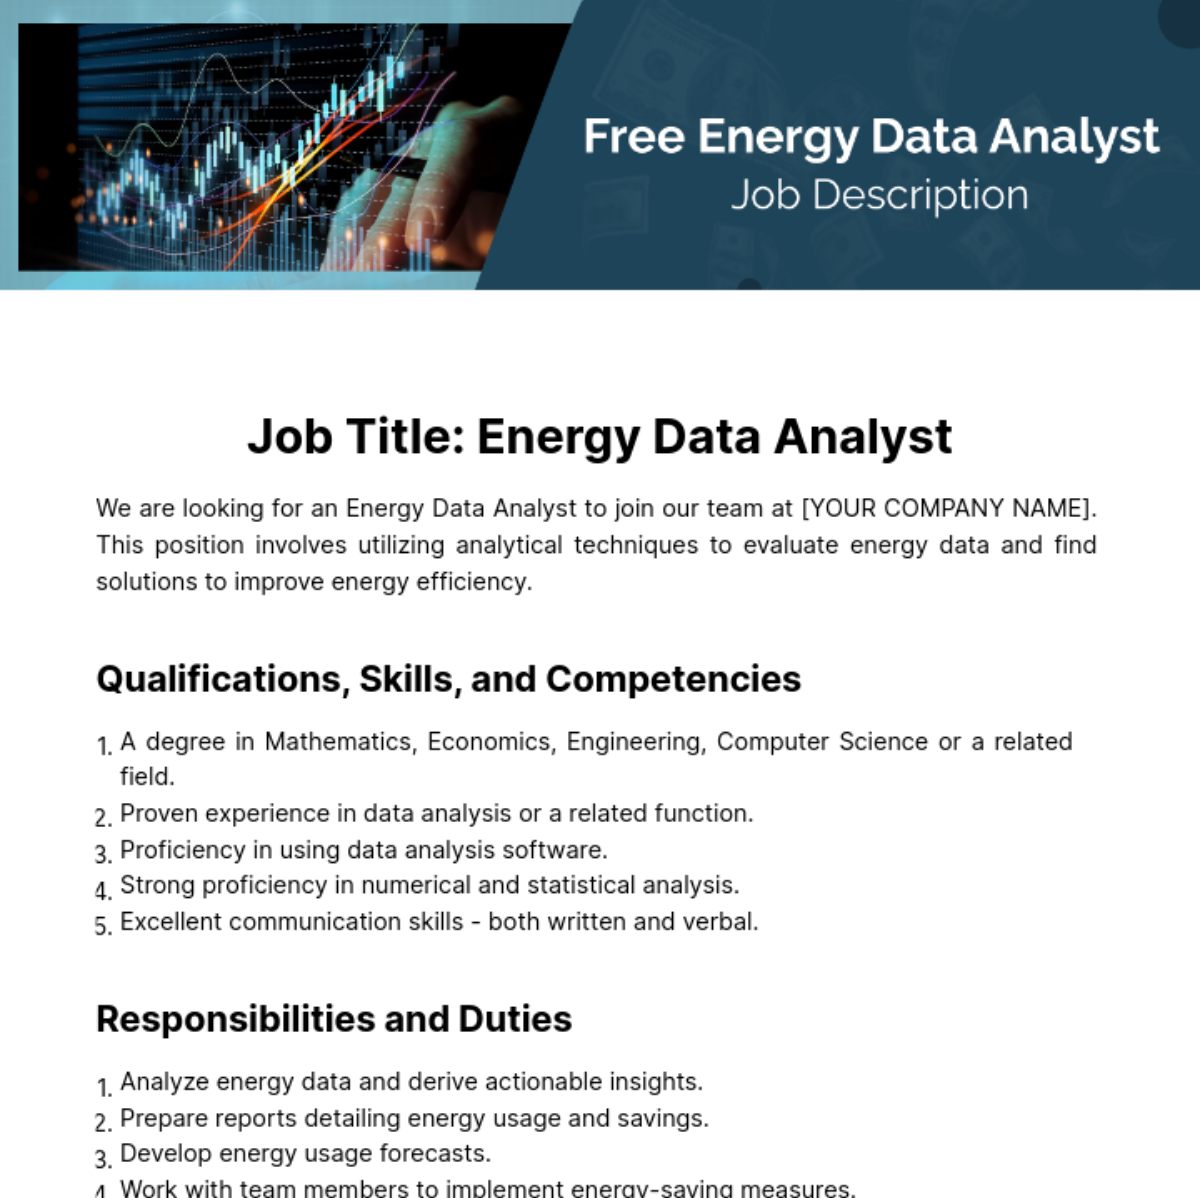 Free Energy Data Analyst Job Description Template